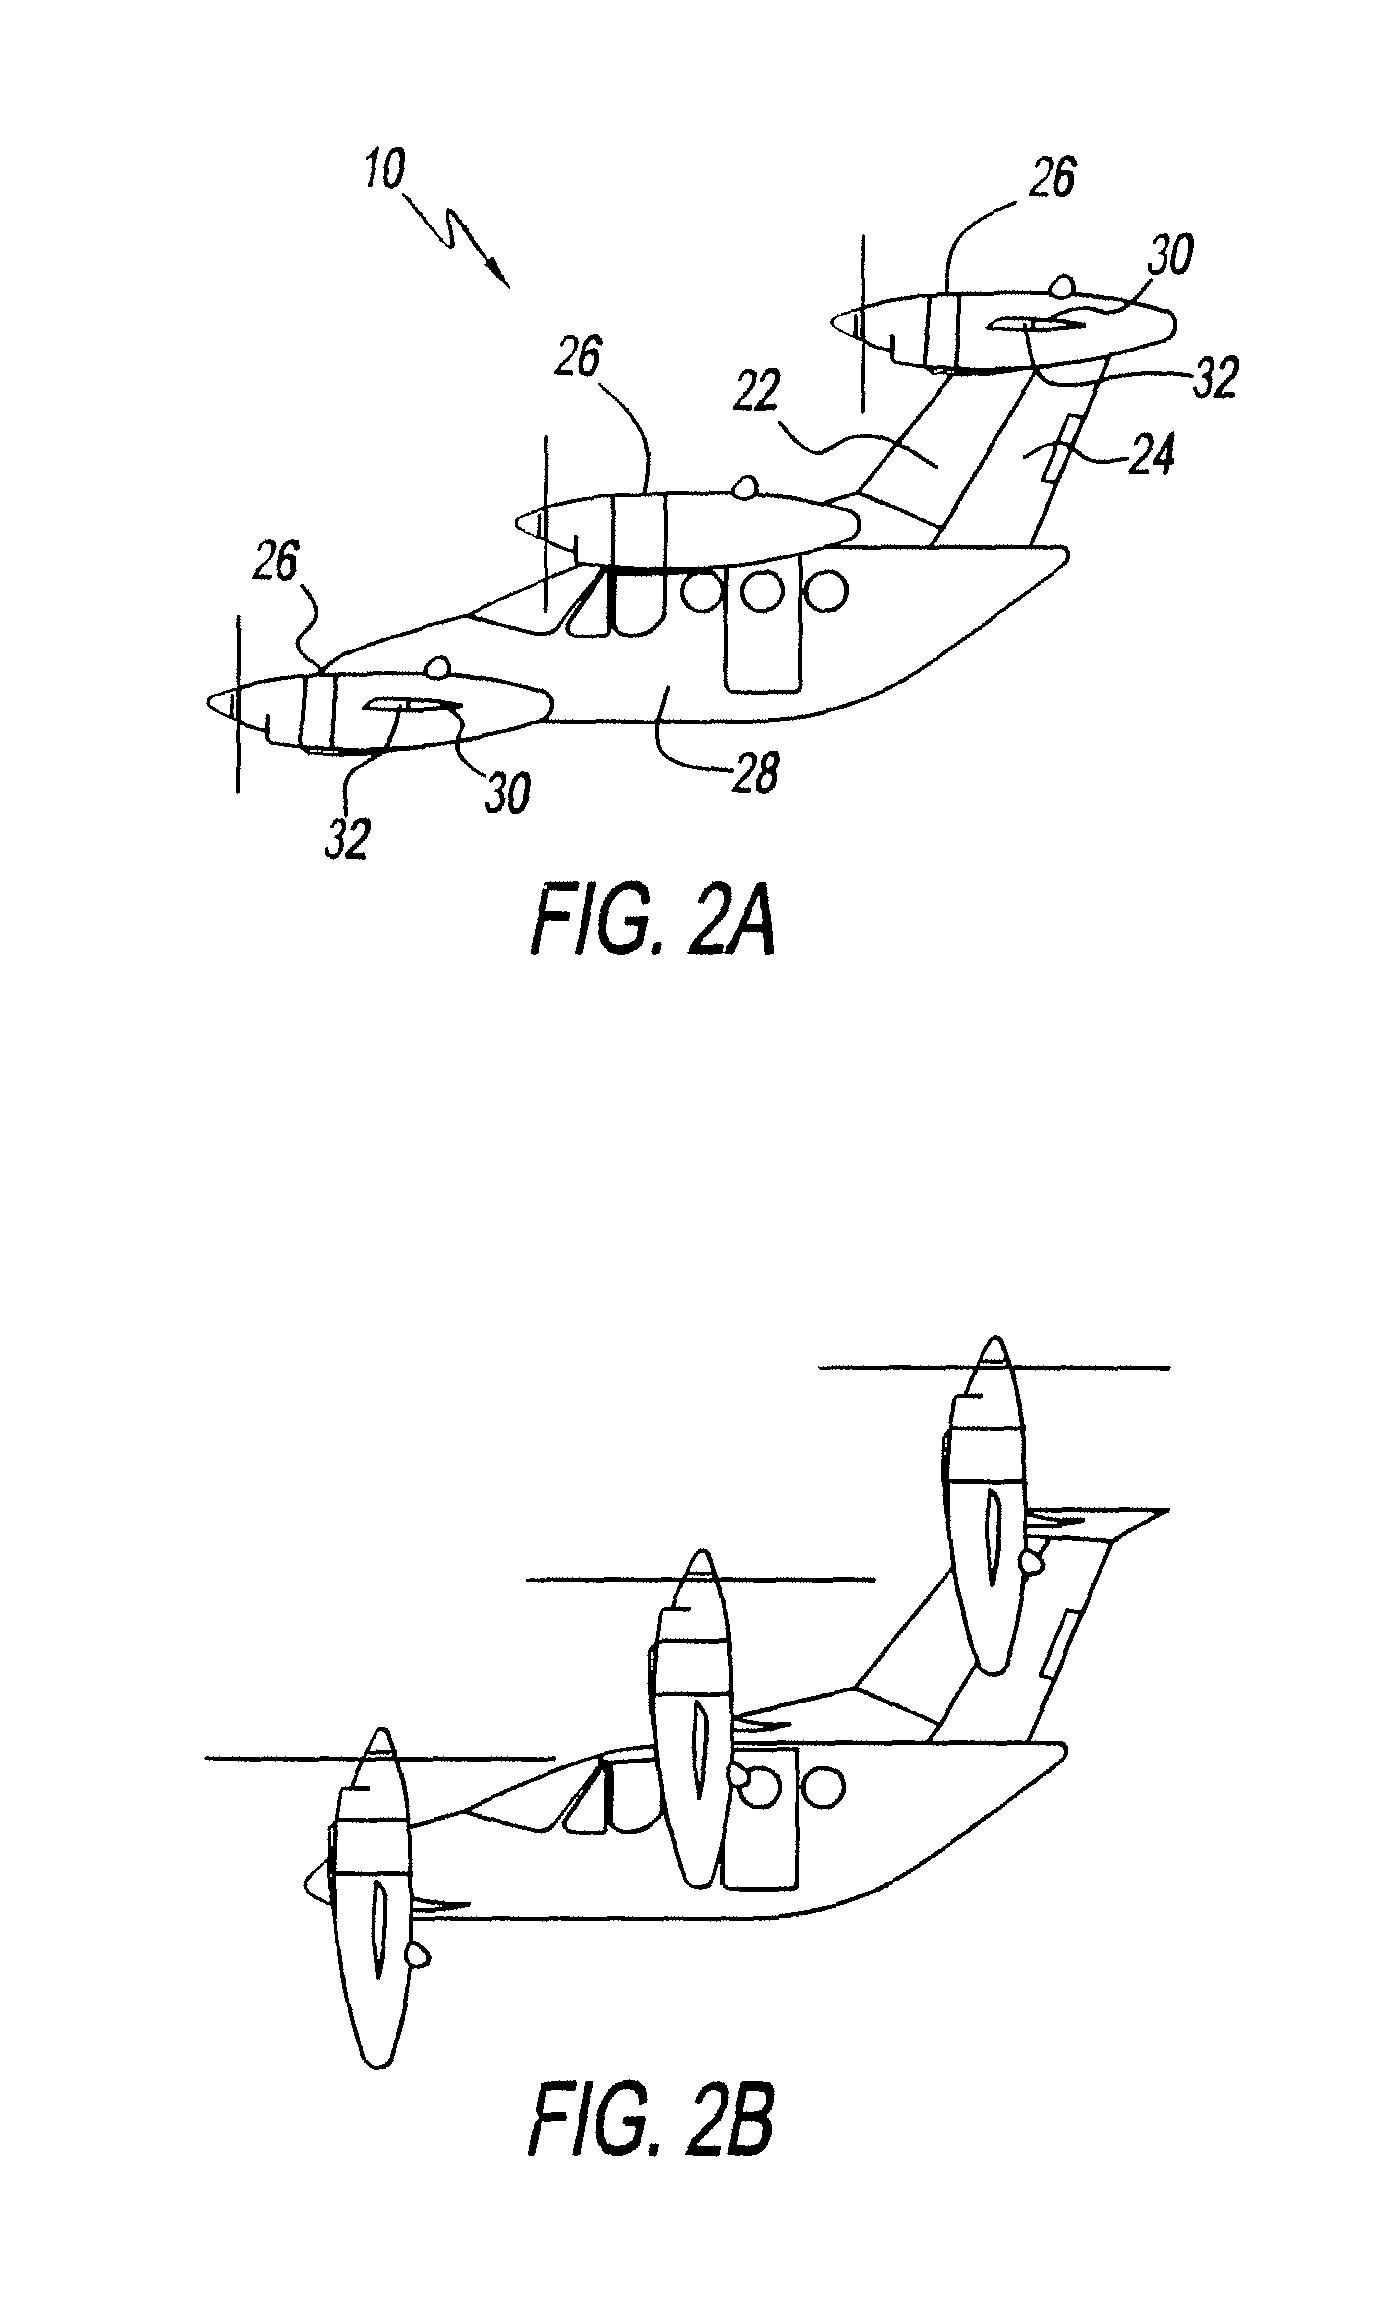 Three-wing, six tilt-propulsion unit, VTOL aircraft